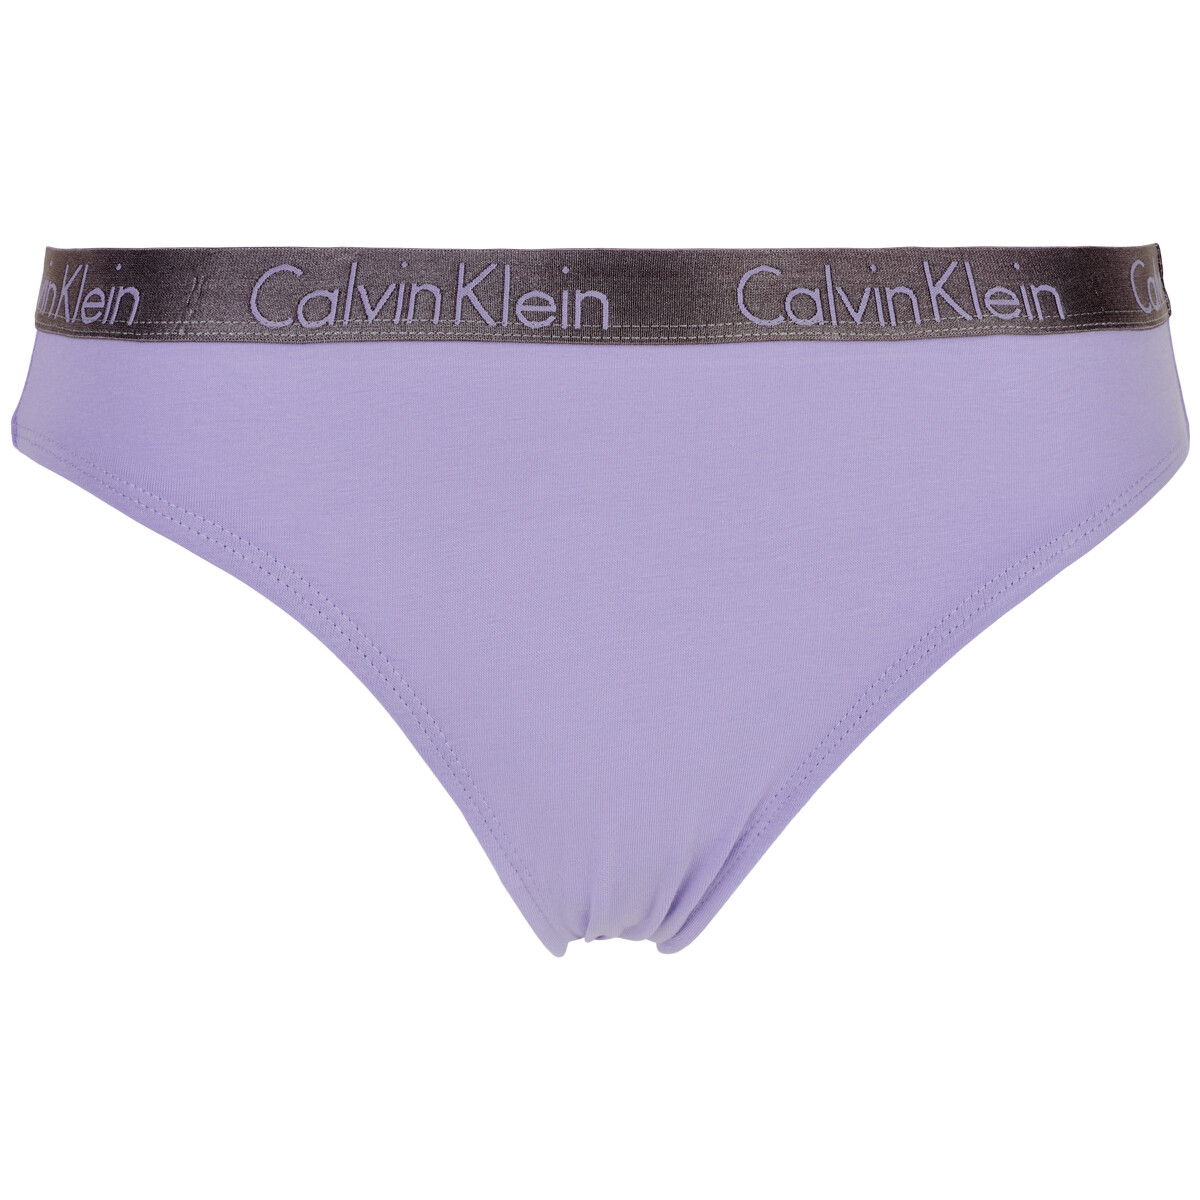 Calvin Klein Lingeri Tai Trusse, Farve: Vervia, Størrelse: S, Dame